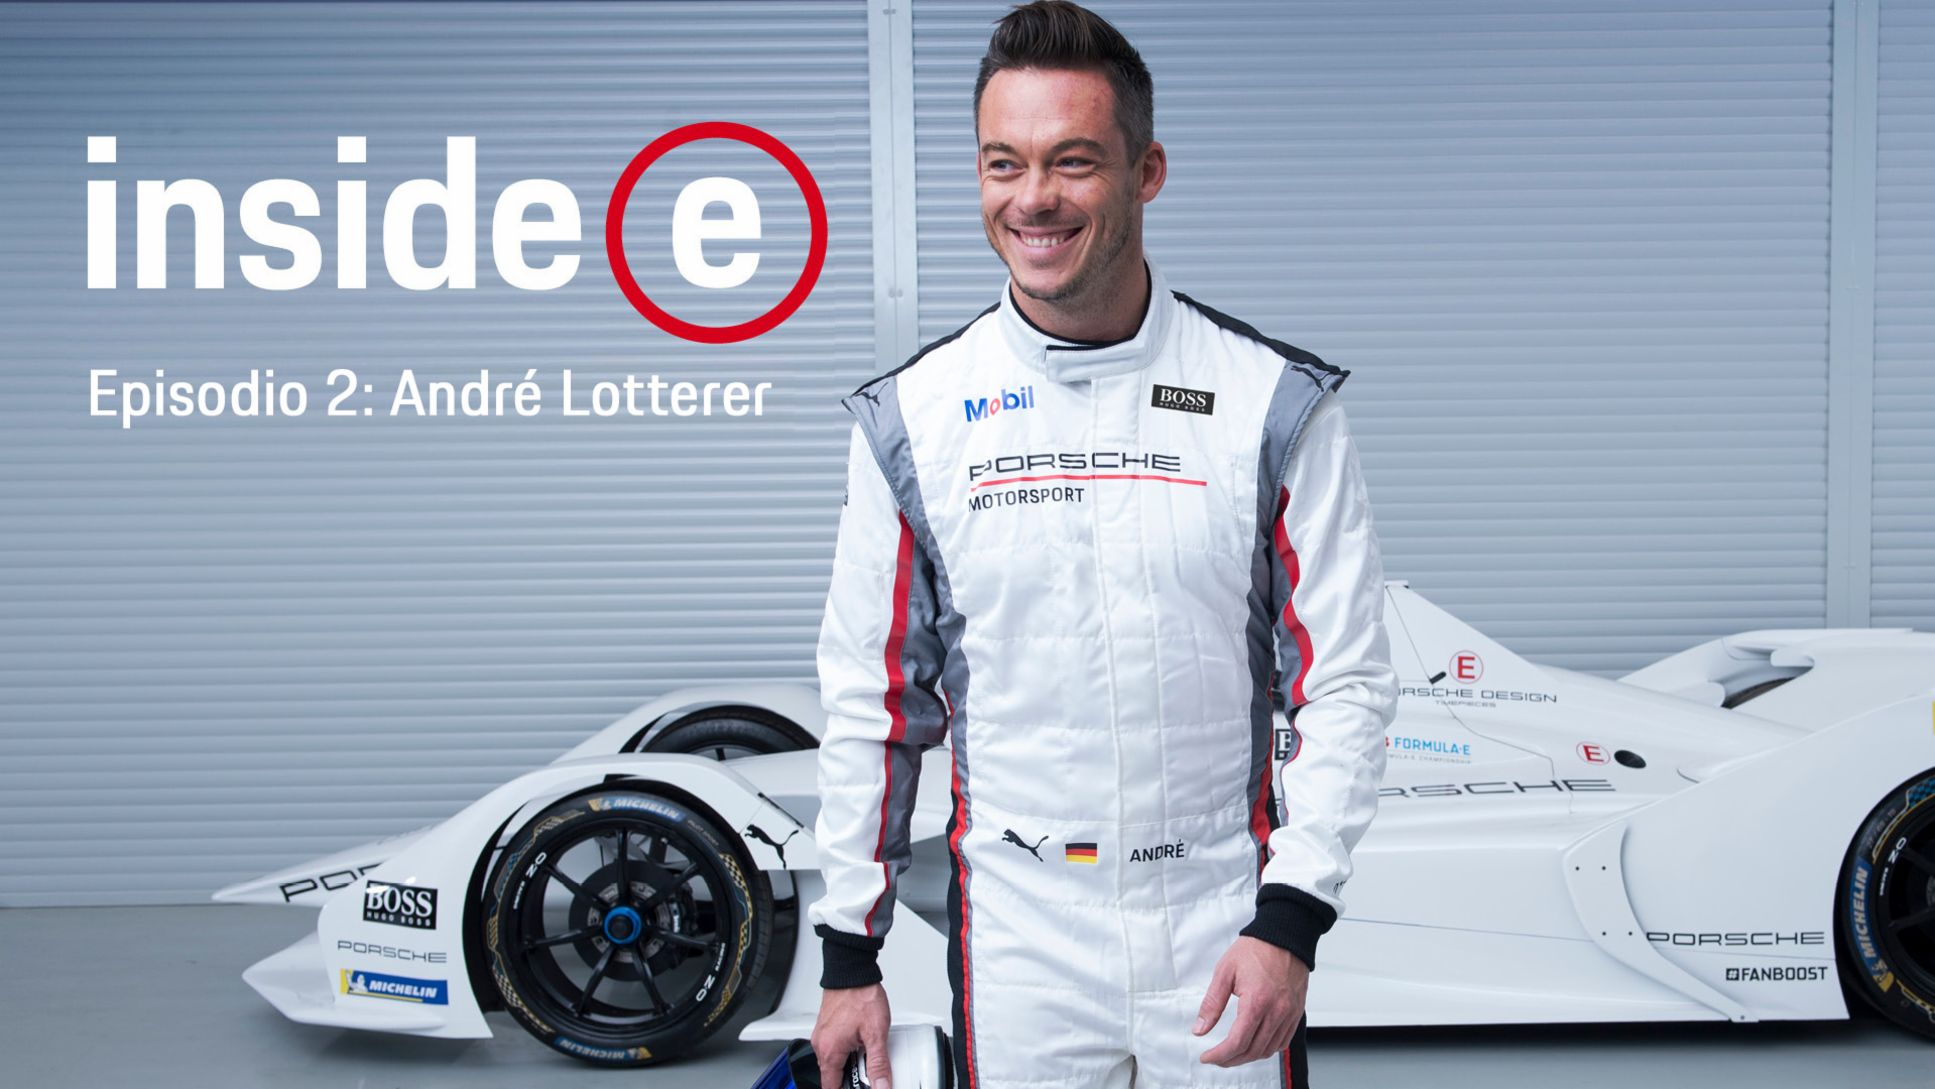 Podcast “Inside E”, episodio 2 con André Lotterer, 2020, Porsche AG